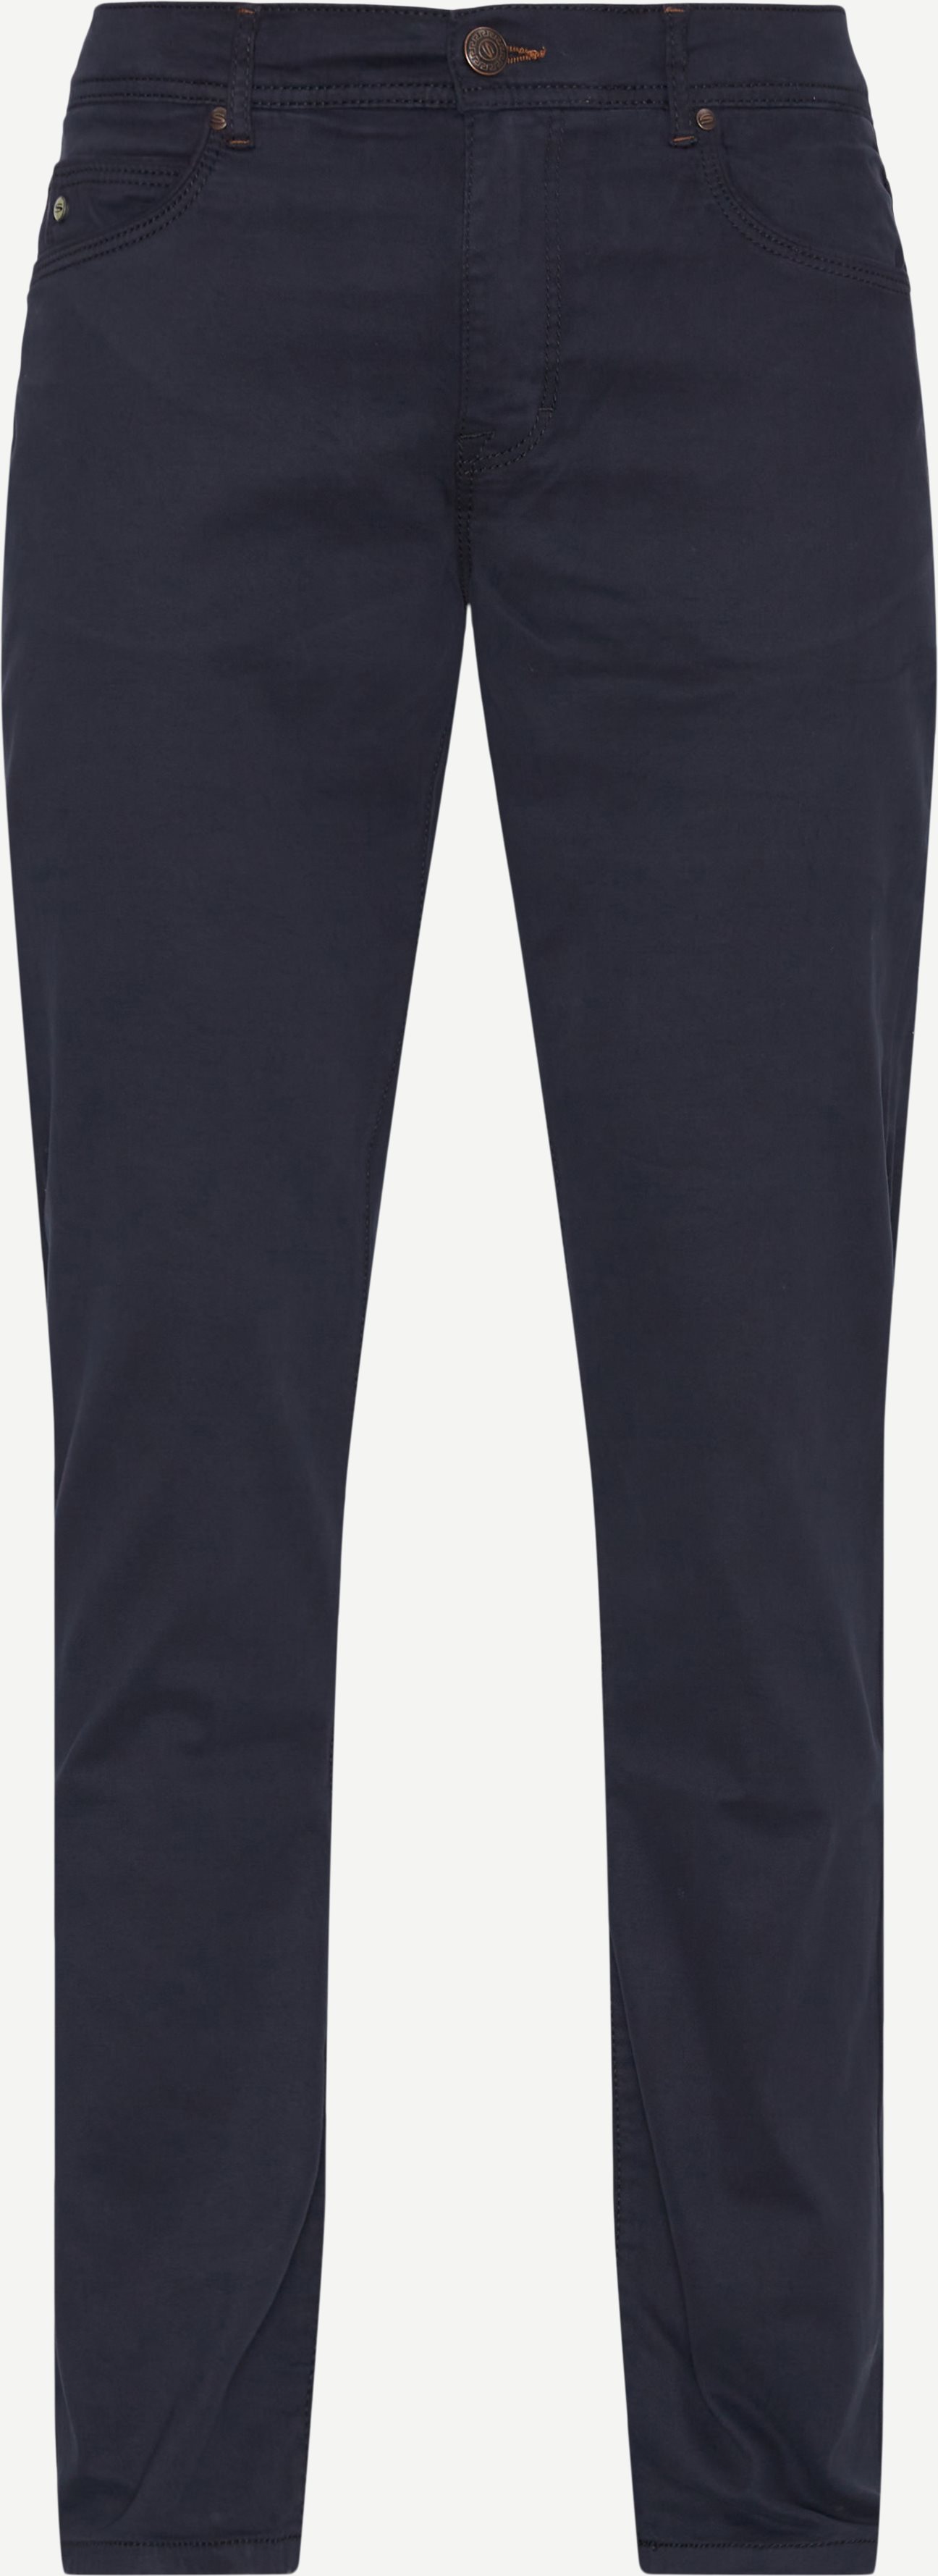 Sand Jeans SUEDE TOUCH BURTON N 2401 Blå